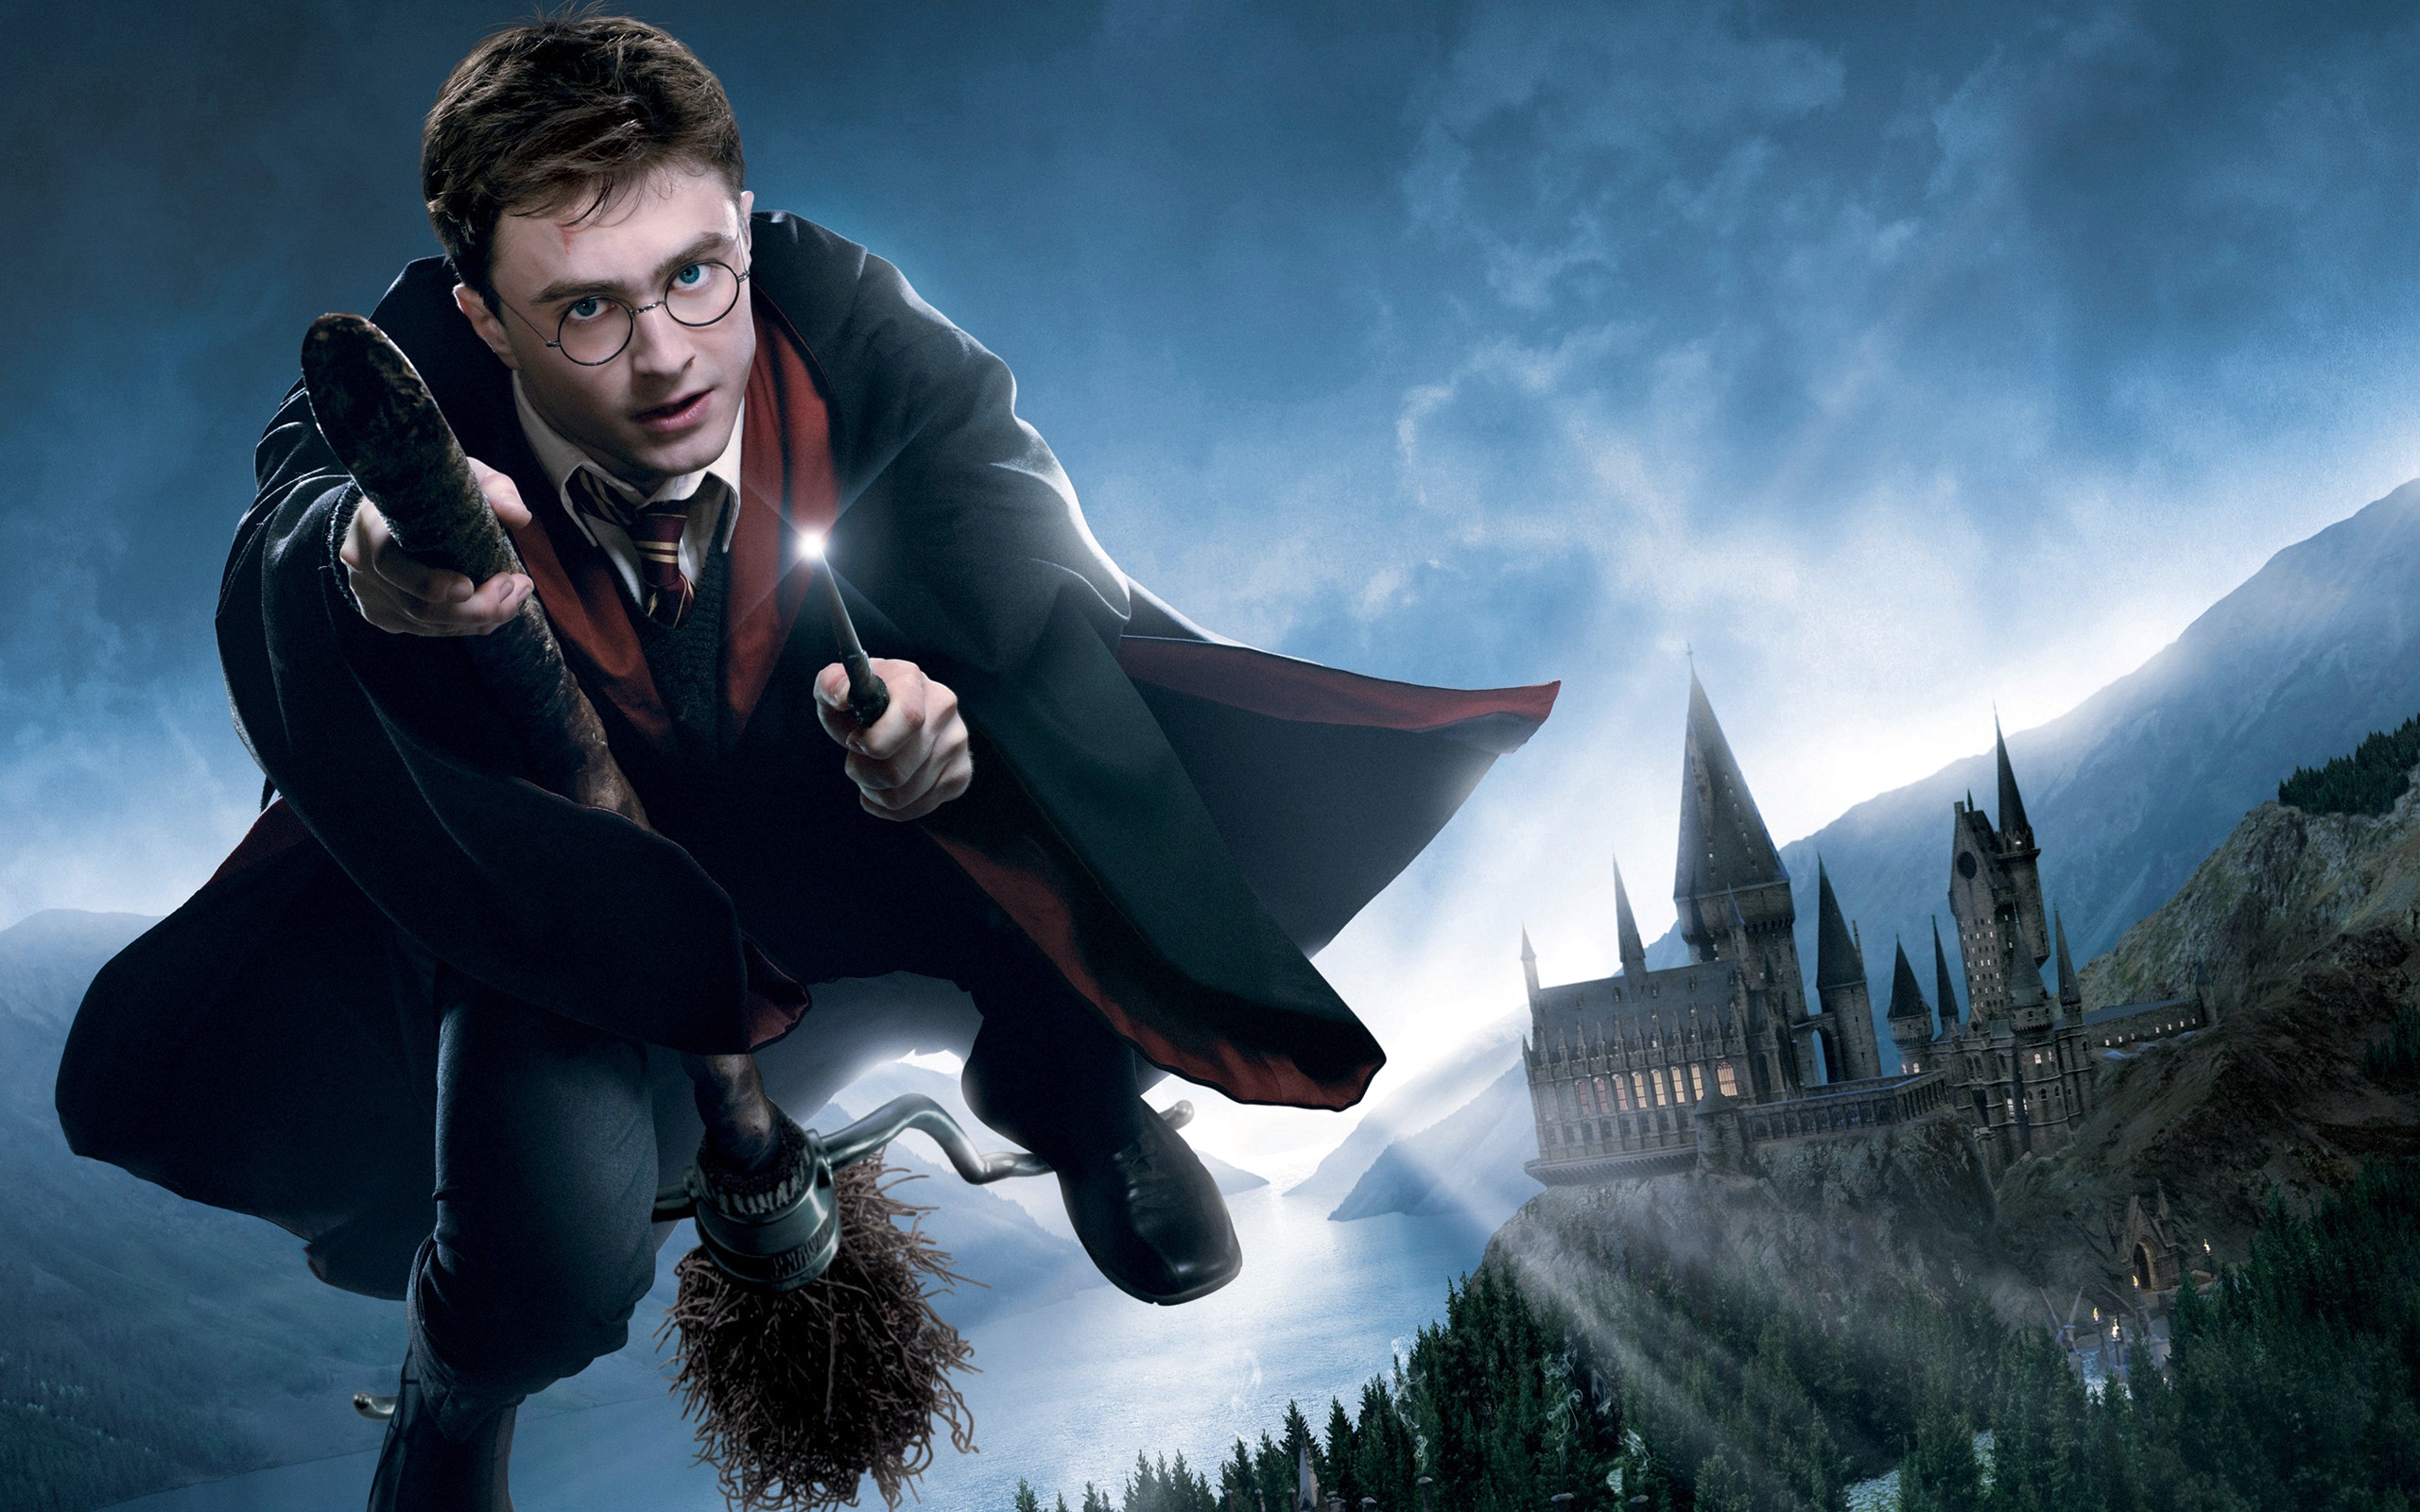 Harry Potter Backgrounds, Compatible - PC, Mobile, Gadgets| 2560x1600 px